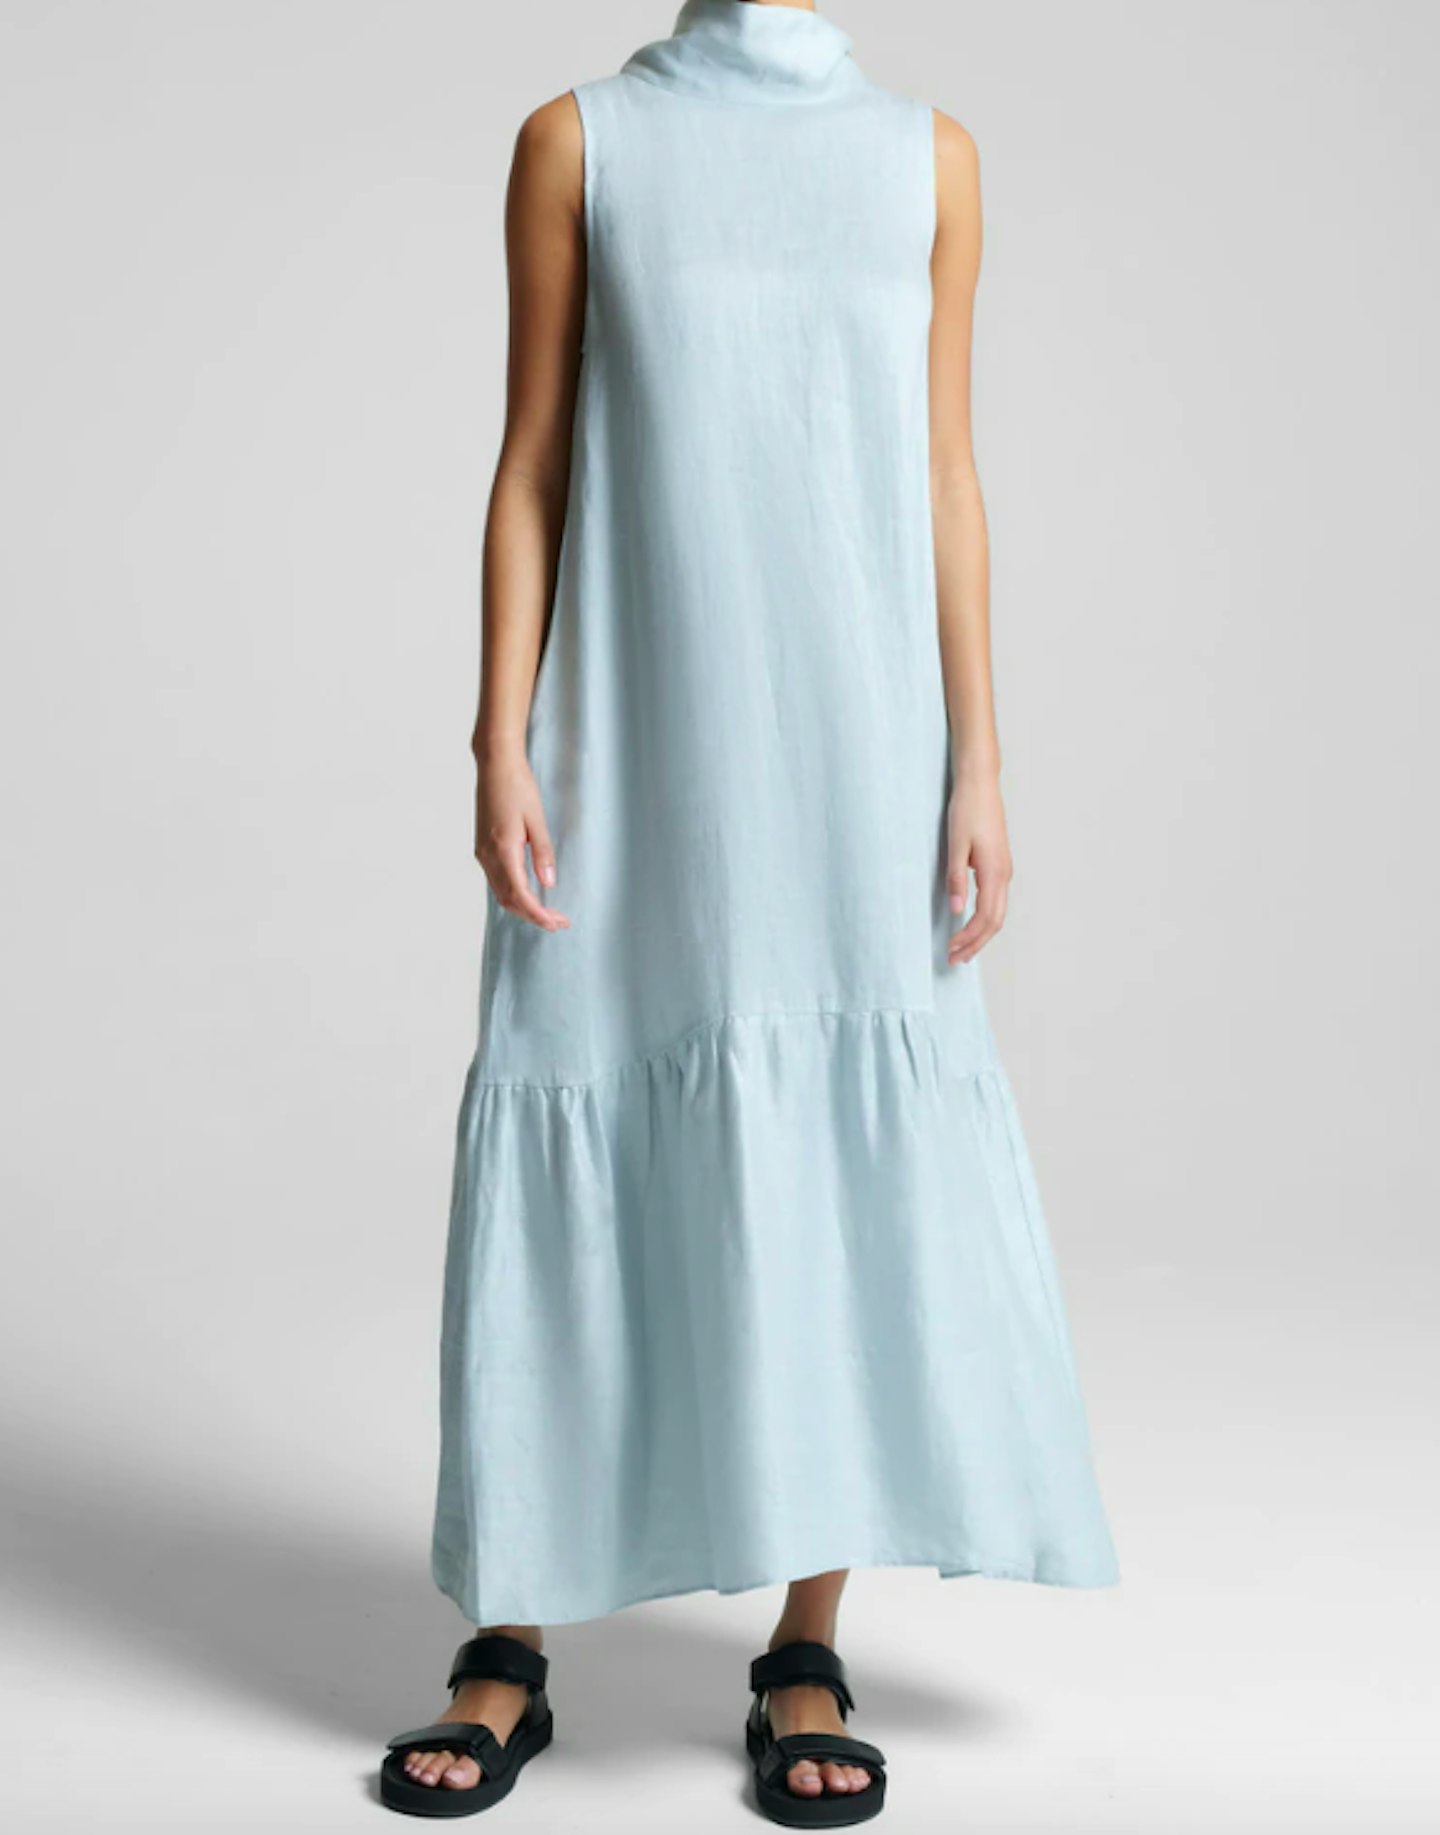 Oslo Ice Blue Organic Heavy Weave Linen Maxi Dress, £380